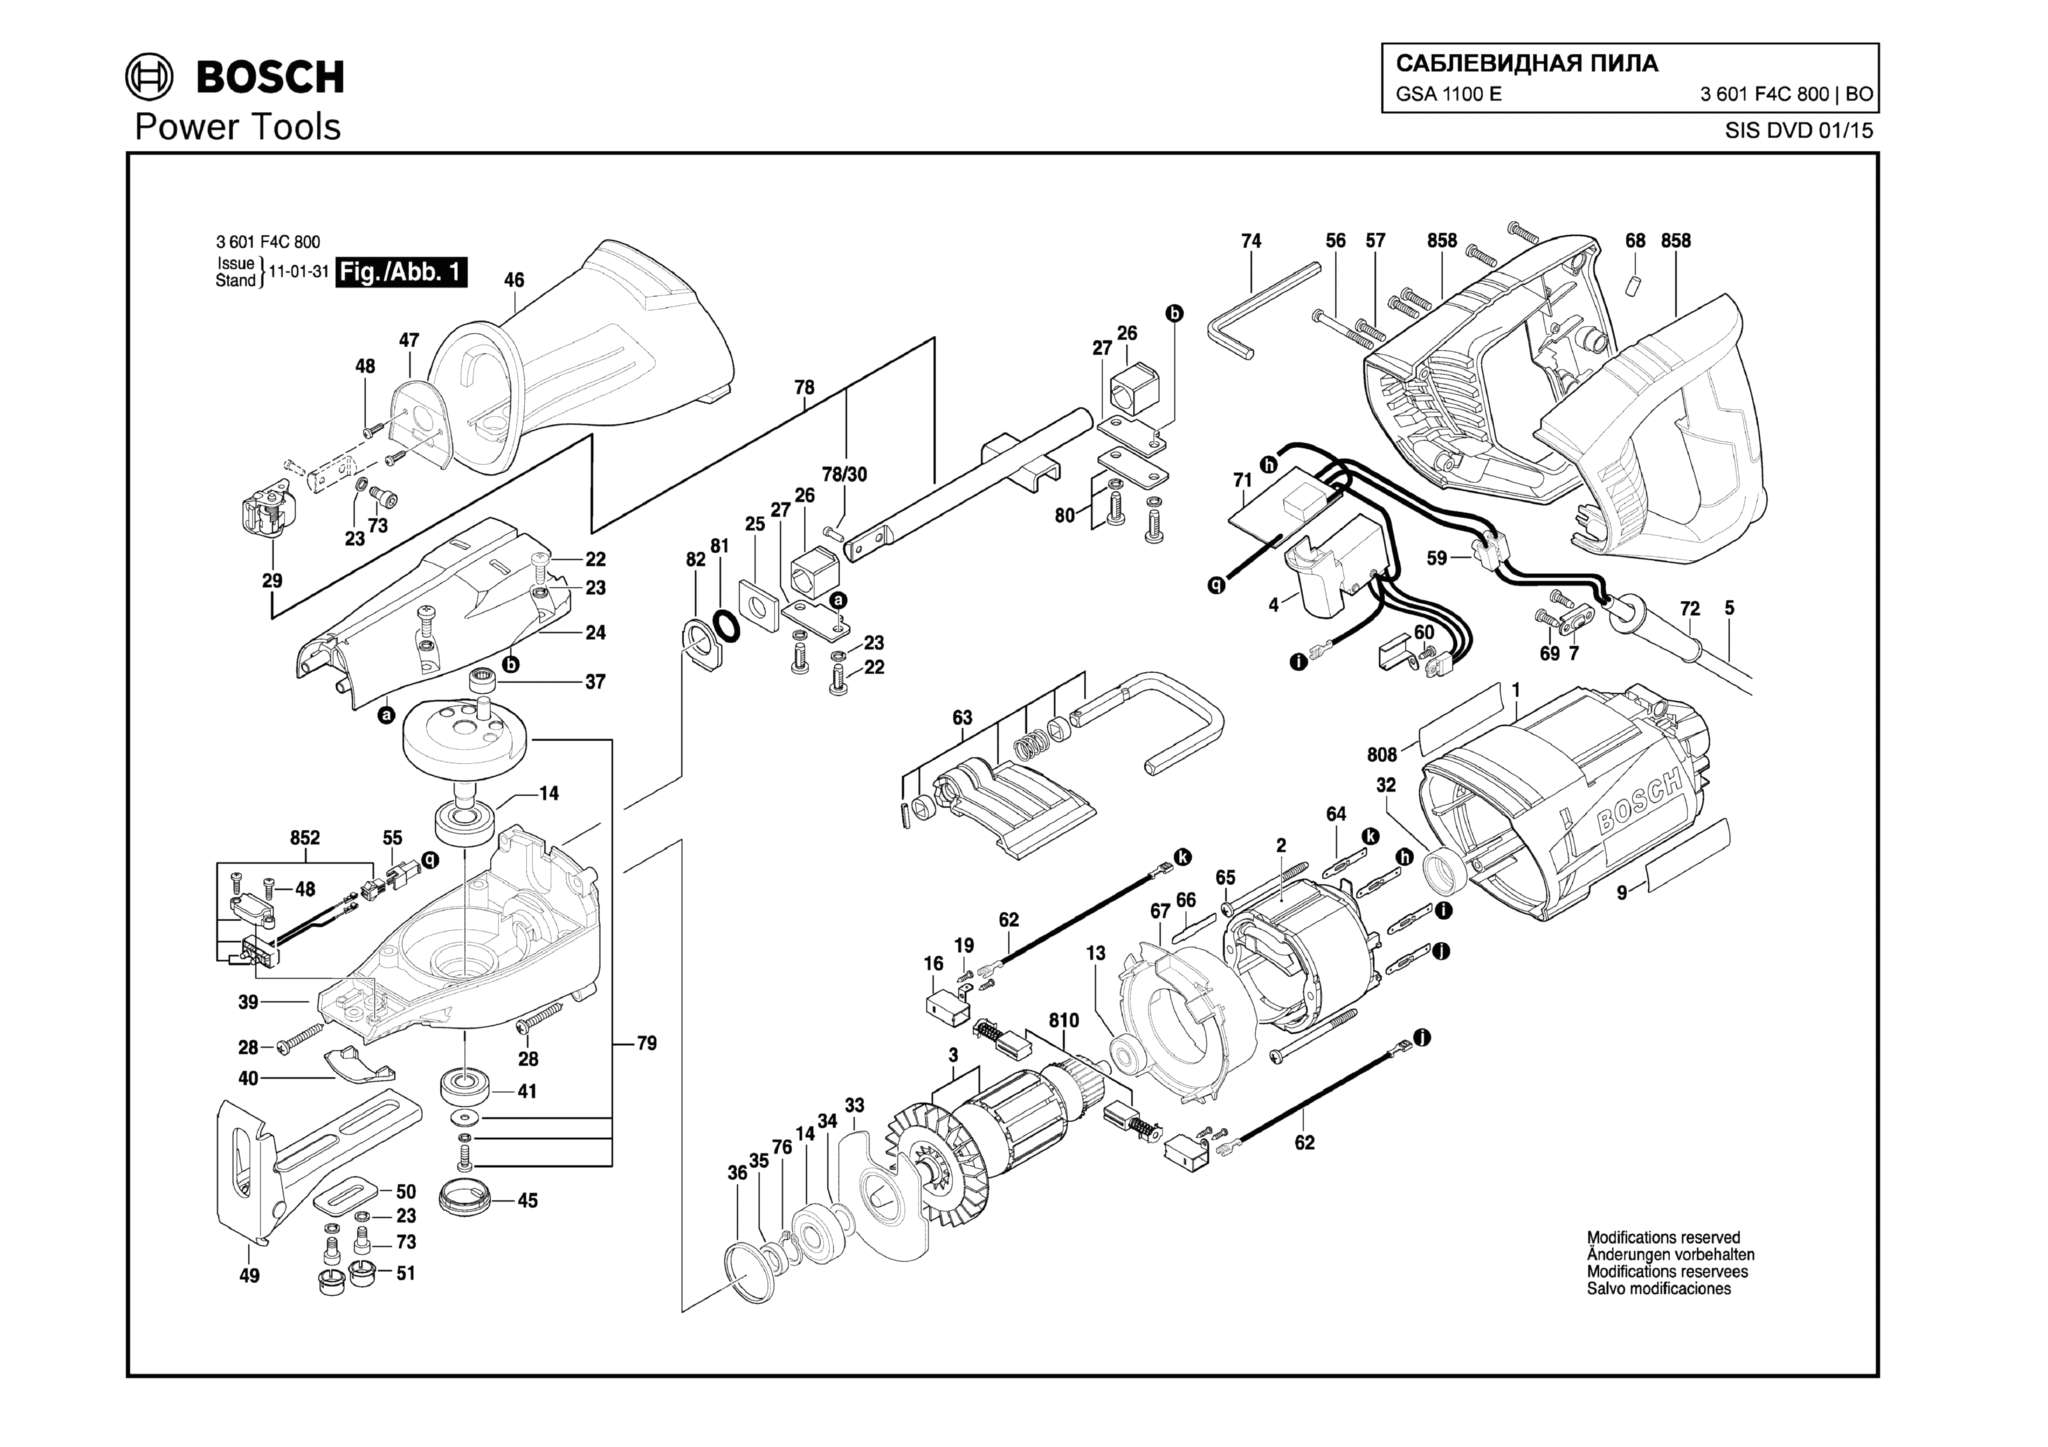 Запчасти, схема и деталировка Bosch GSA 1100 E (ТИП 3601F4C800)